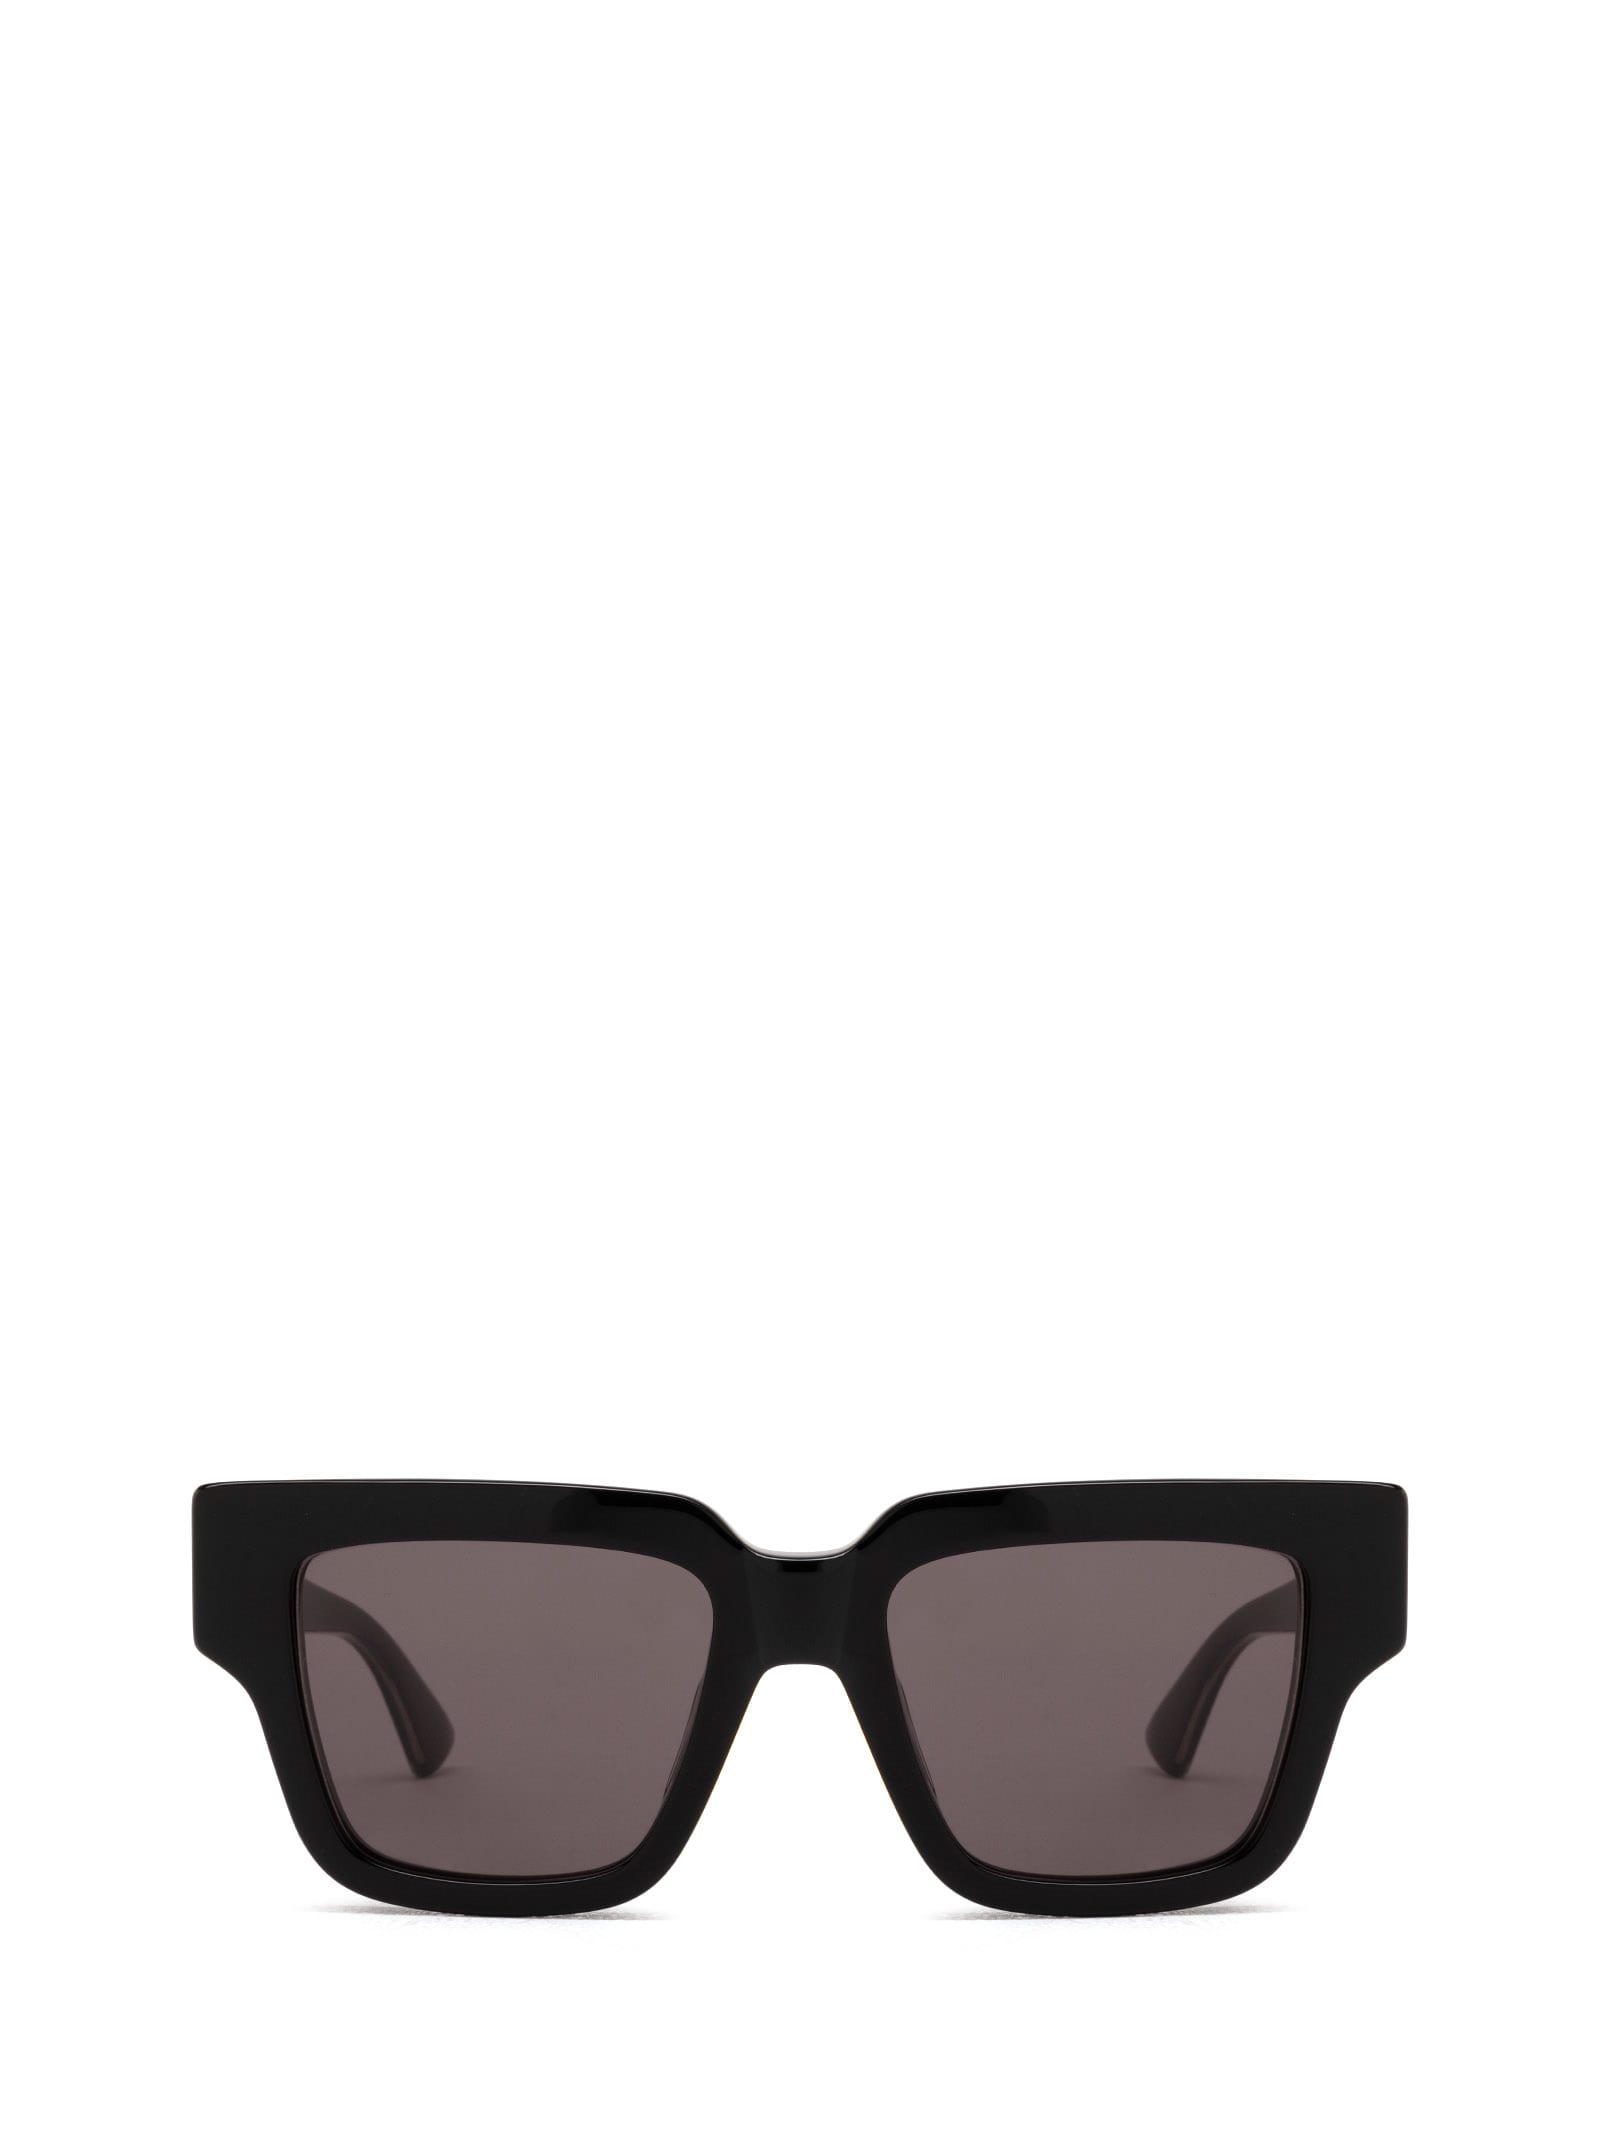 Bv1276s Black Sunglasses